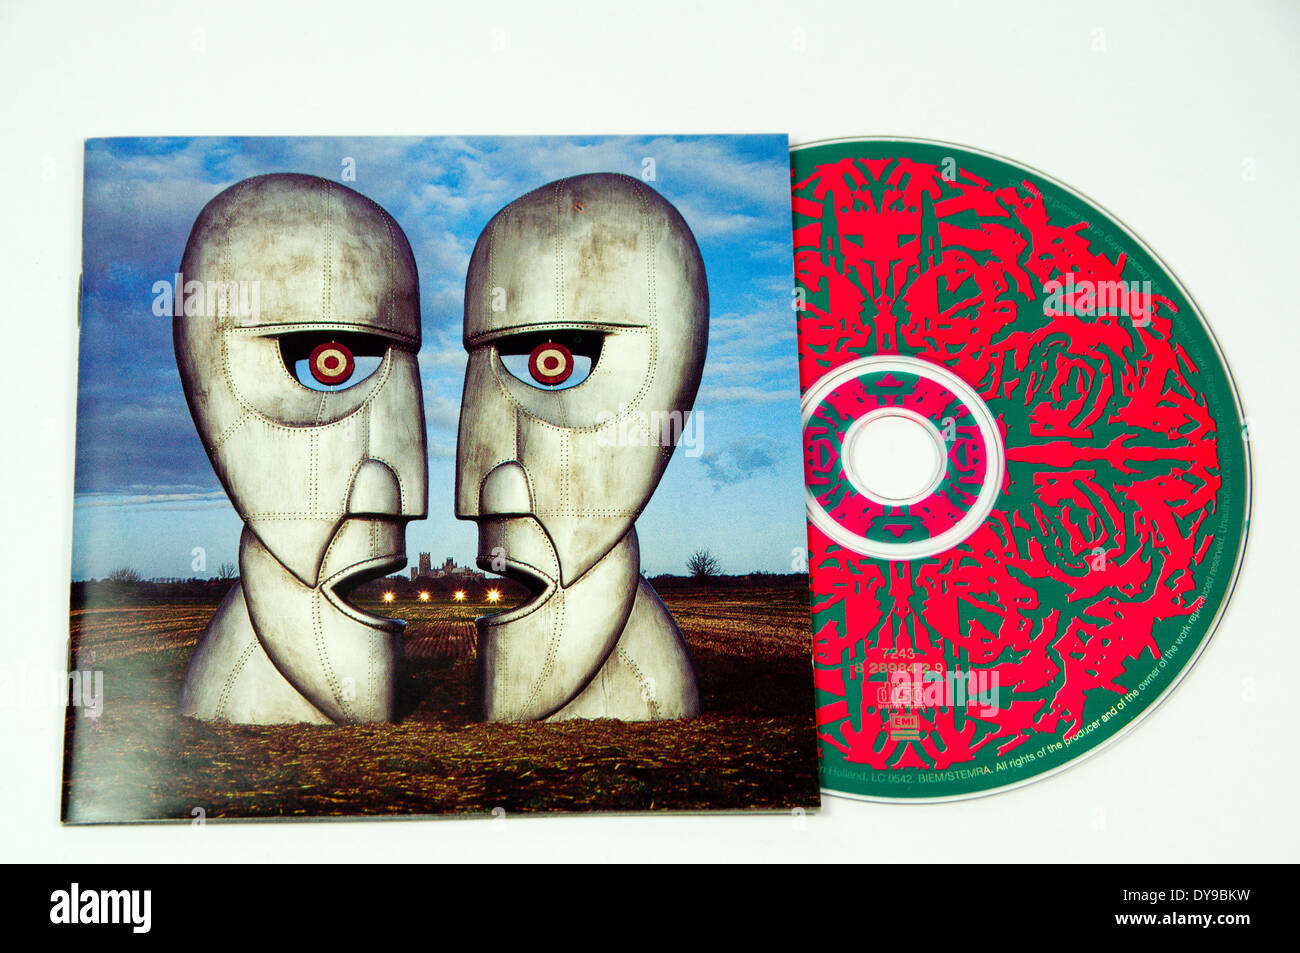 Pink Floyd Division Bell album Stockfotografie - Alamy